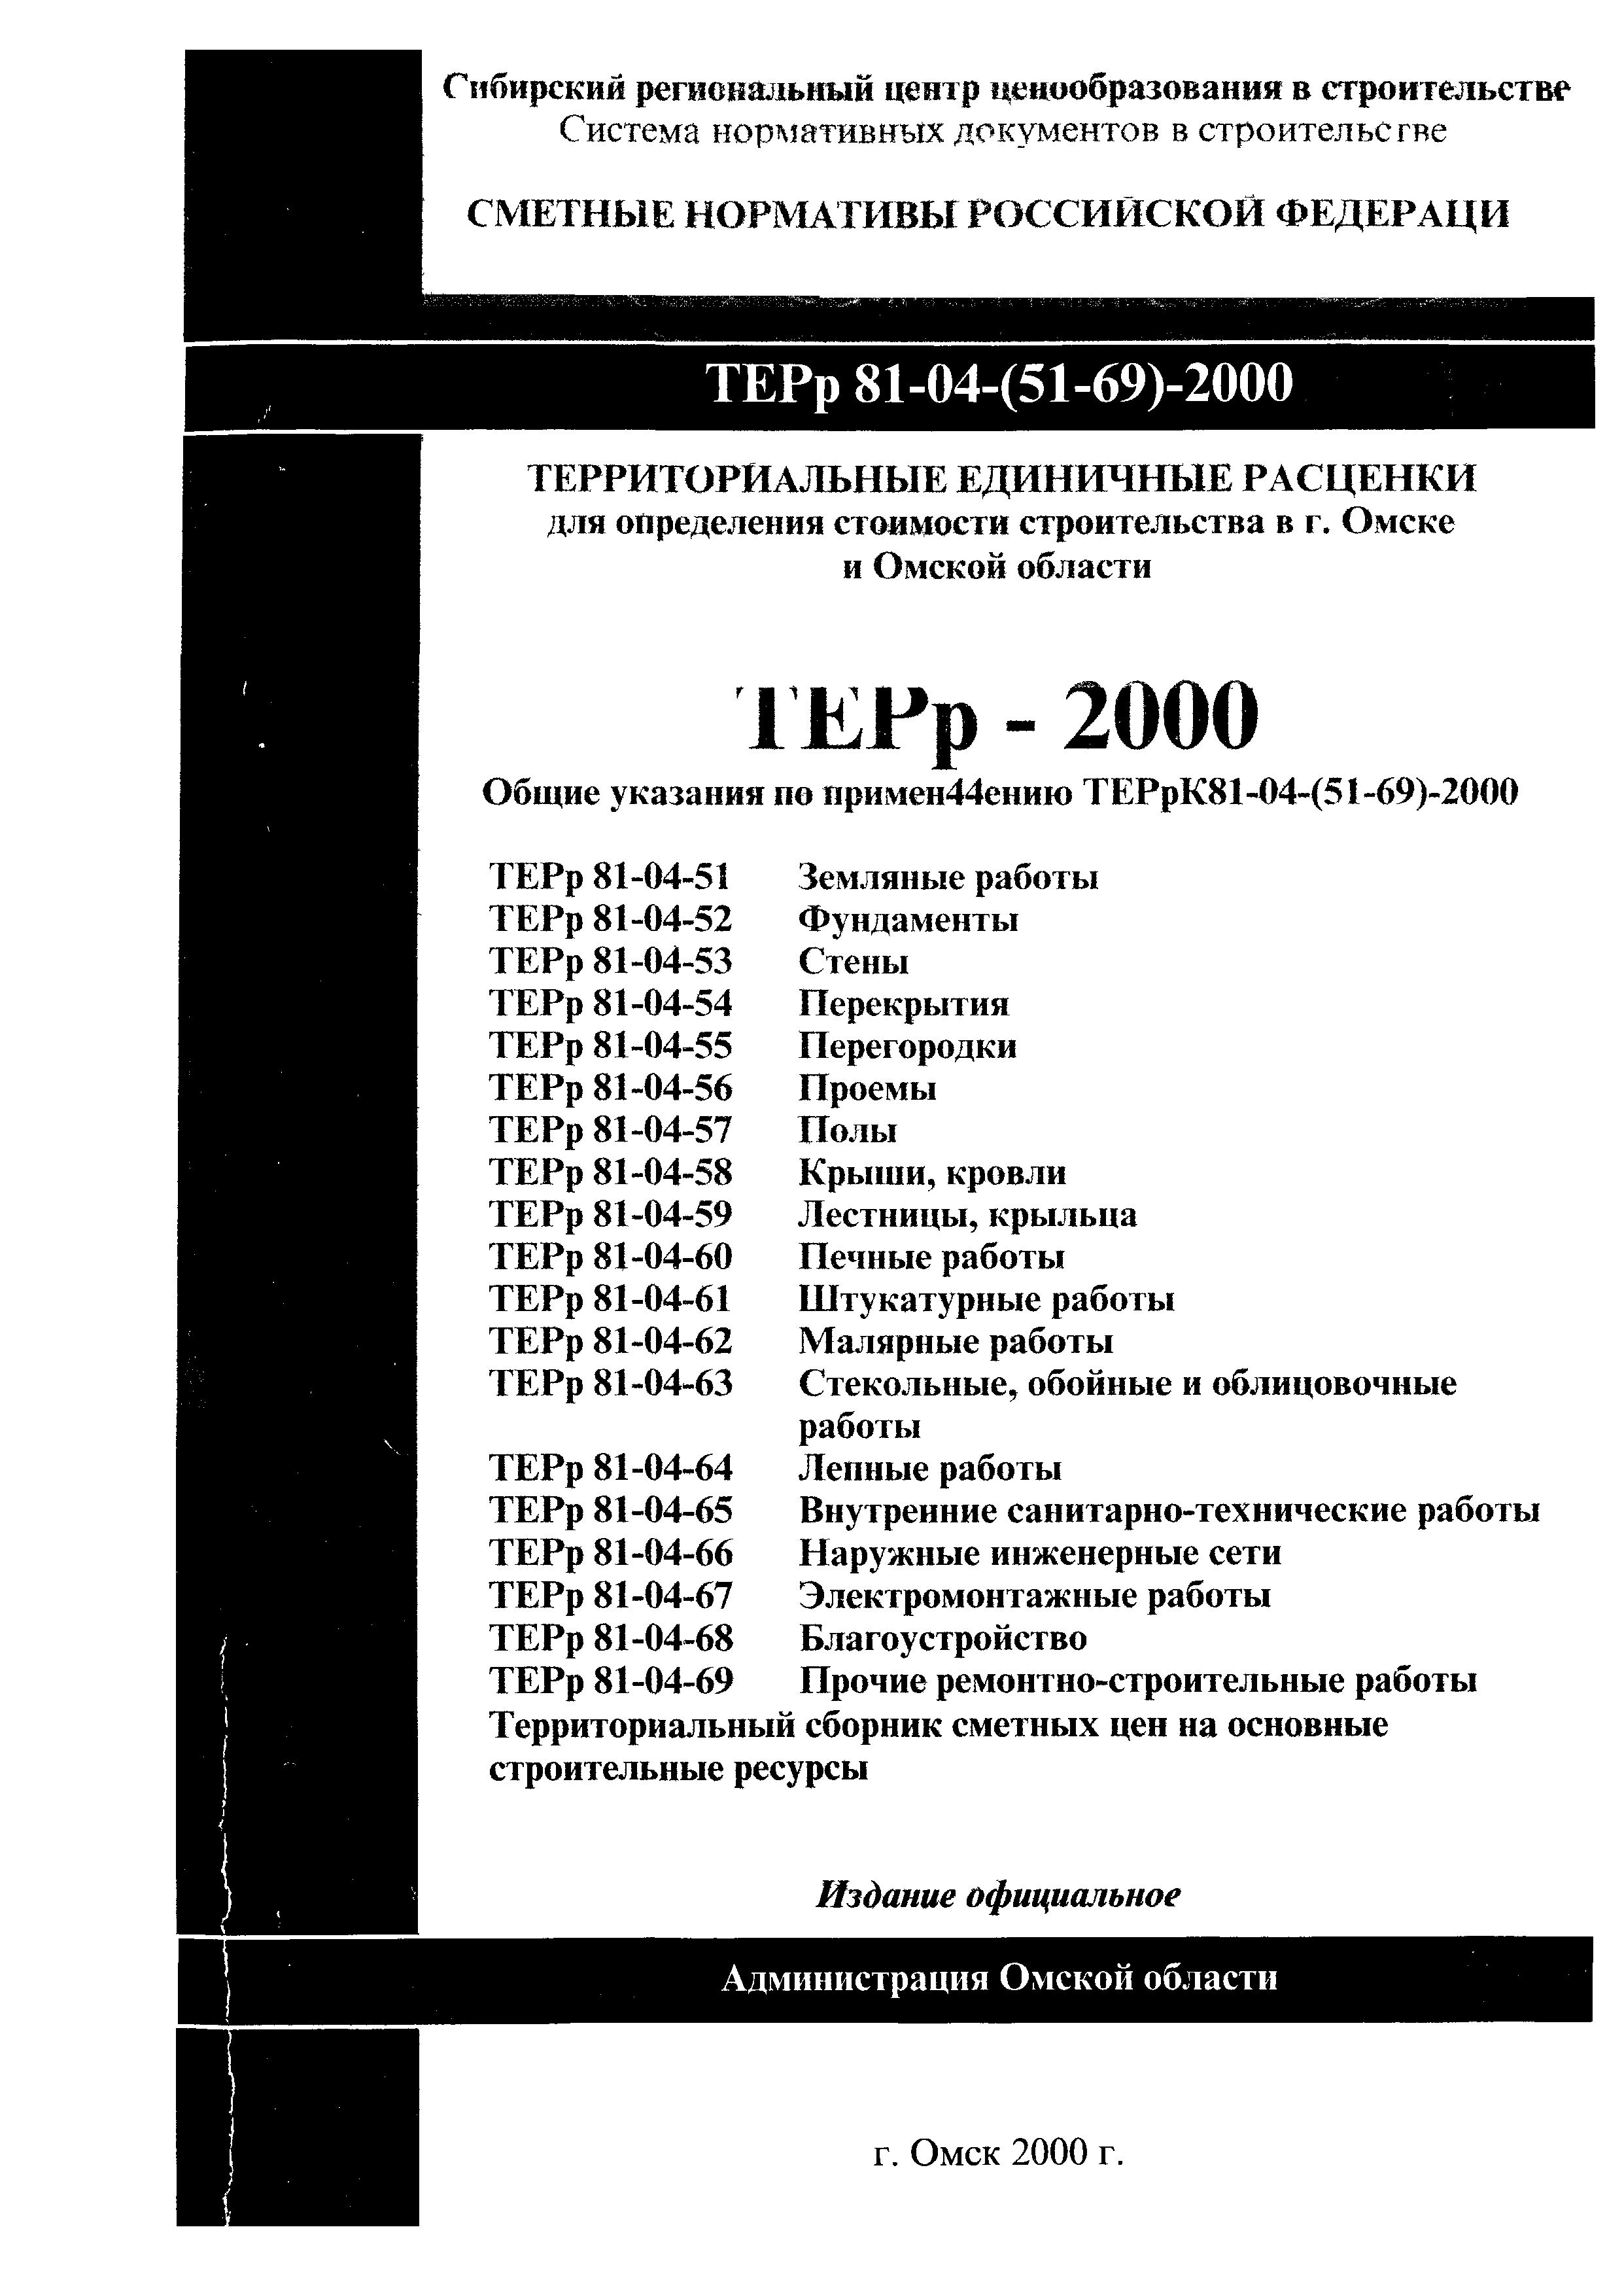 ТЕРр Омской области 2000-69